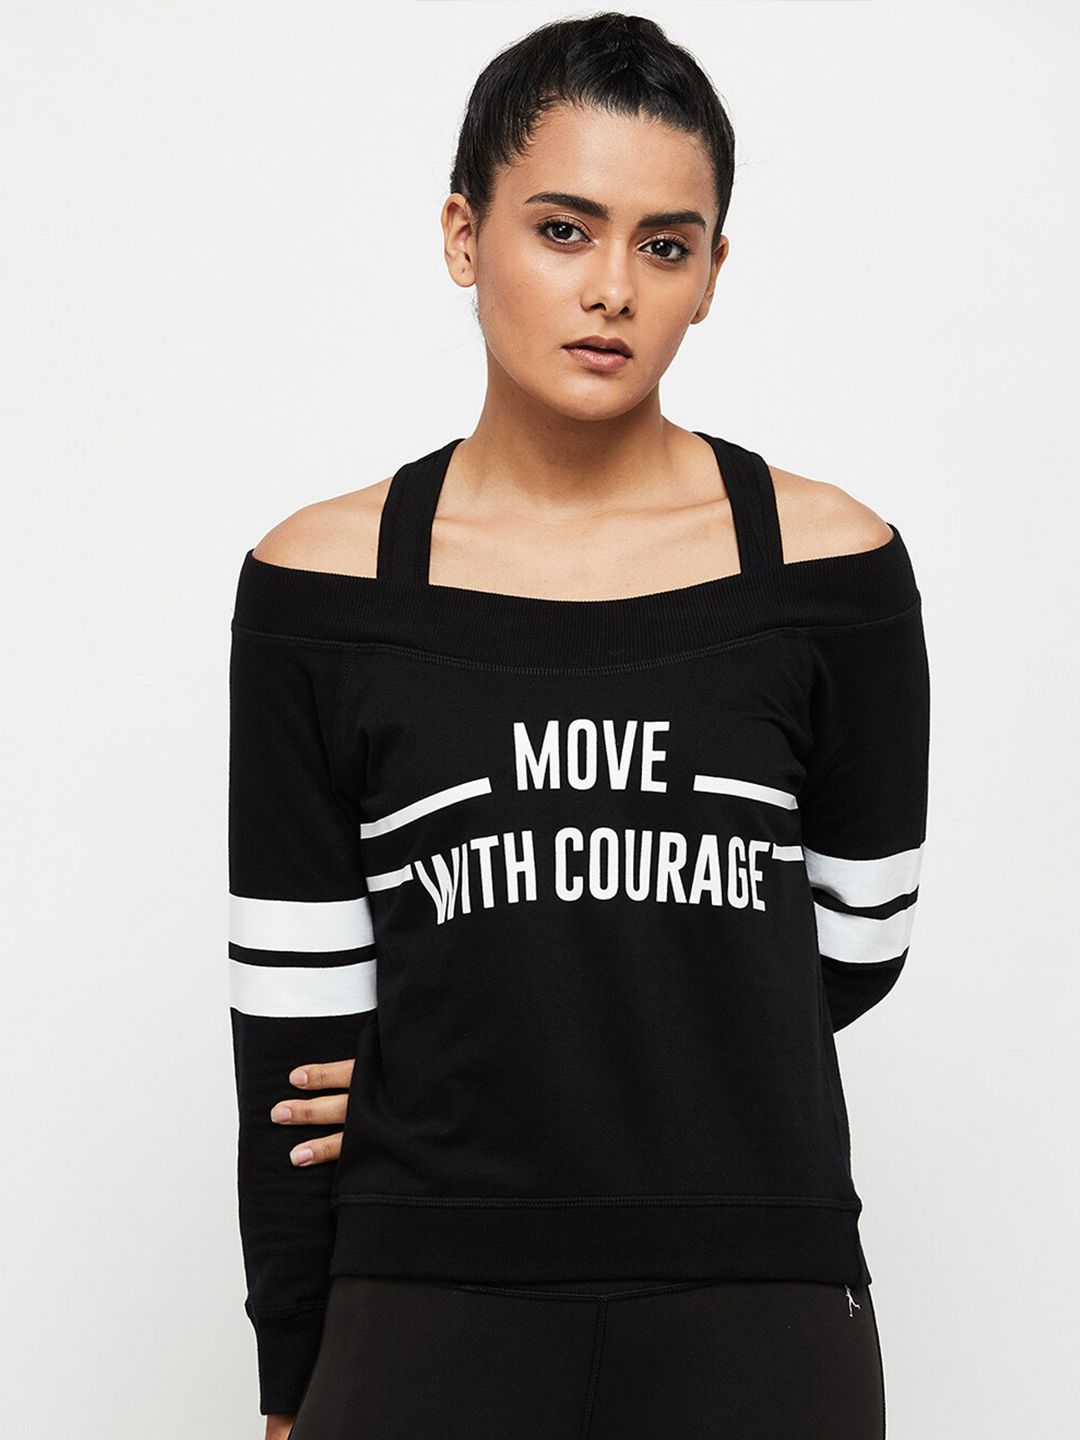 max Women Black Printed Sweatshirt Price in India